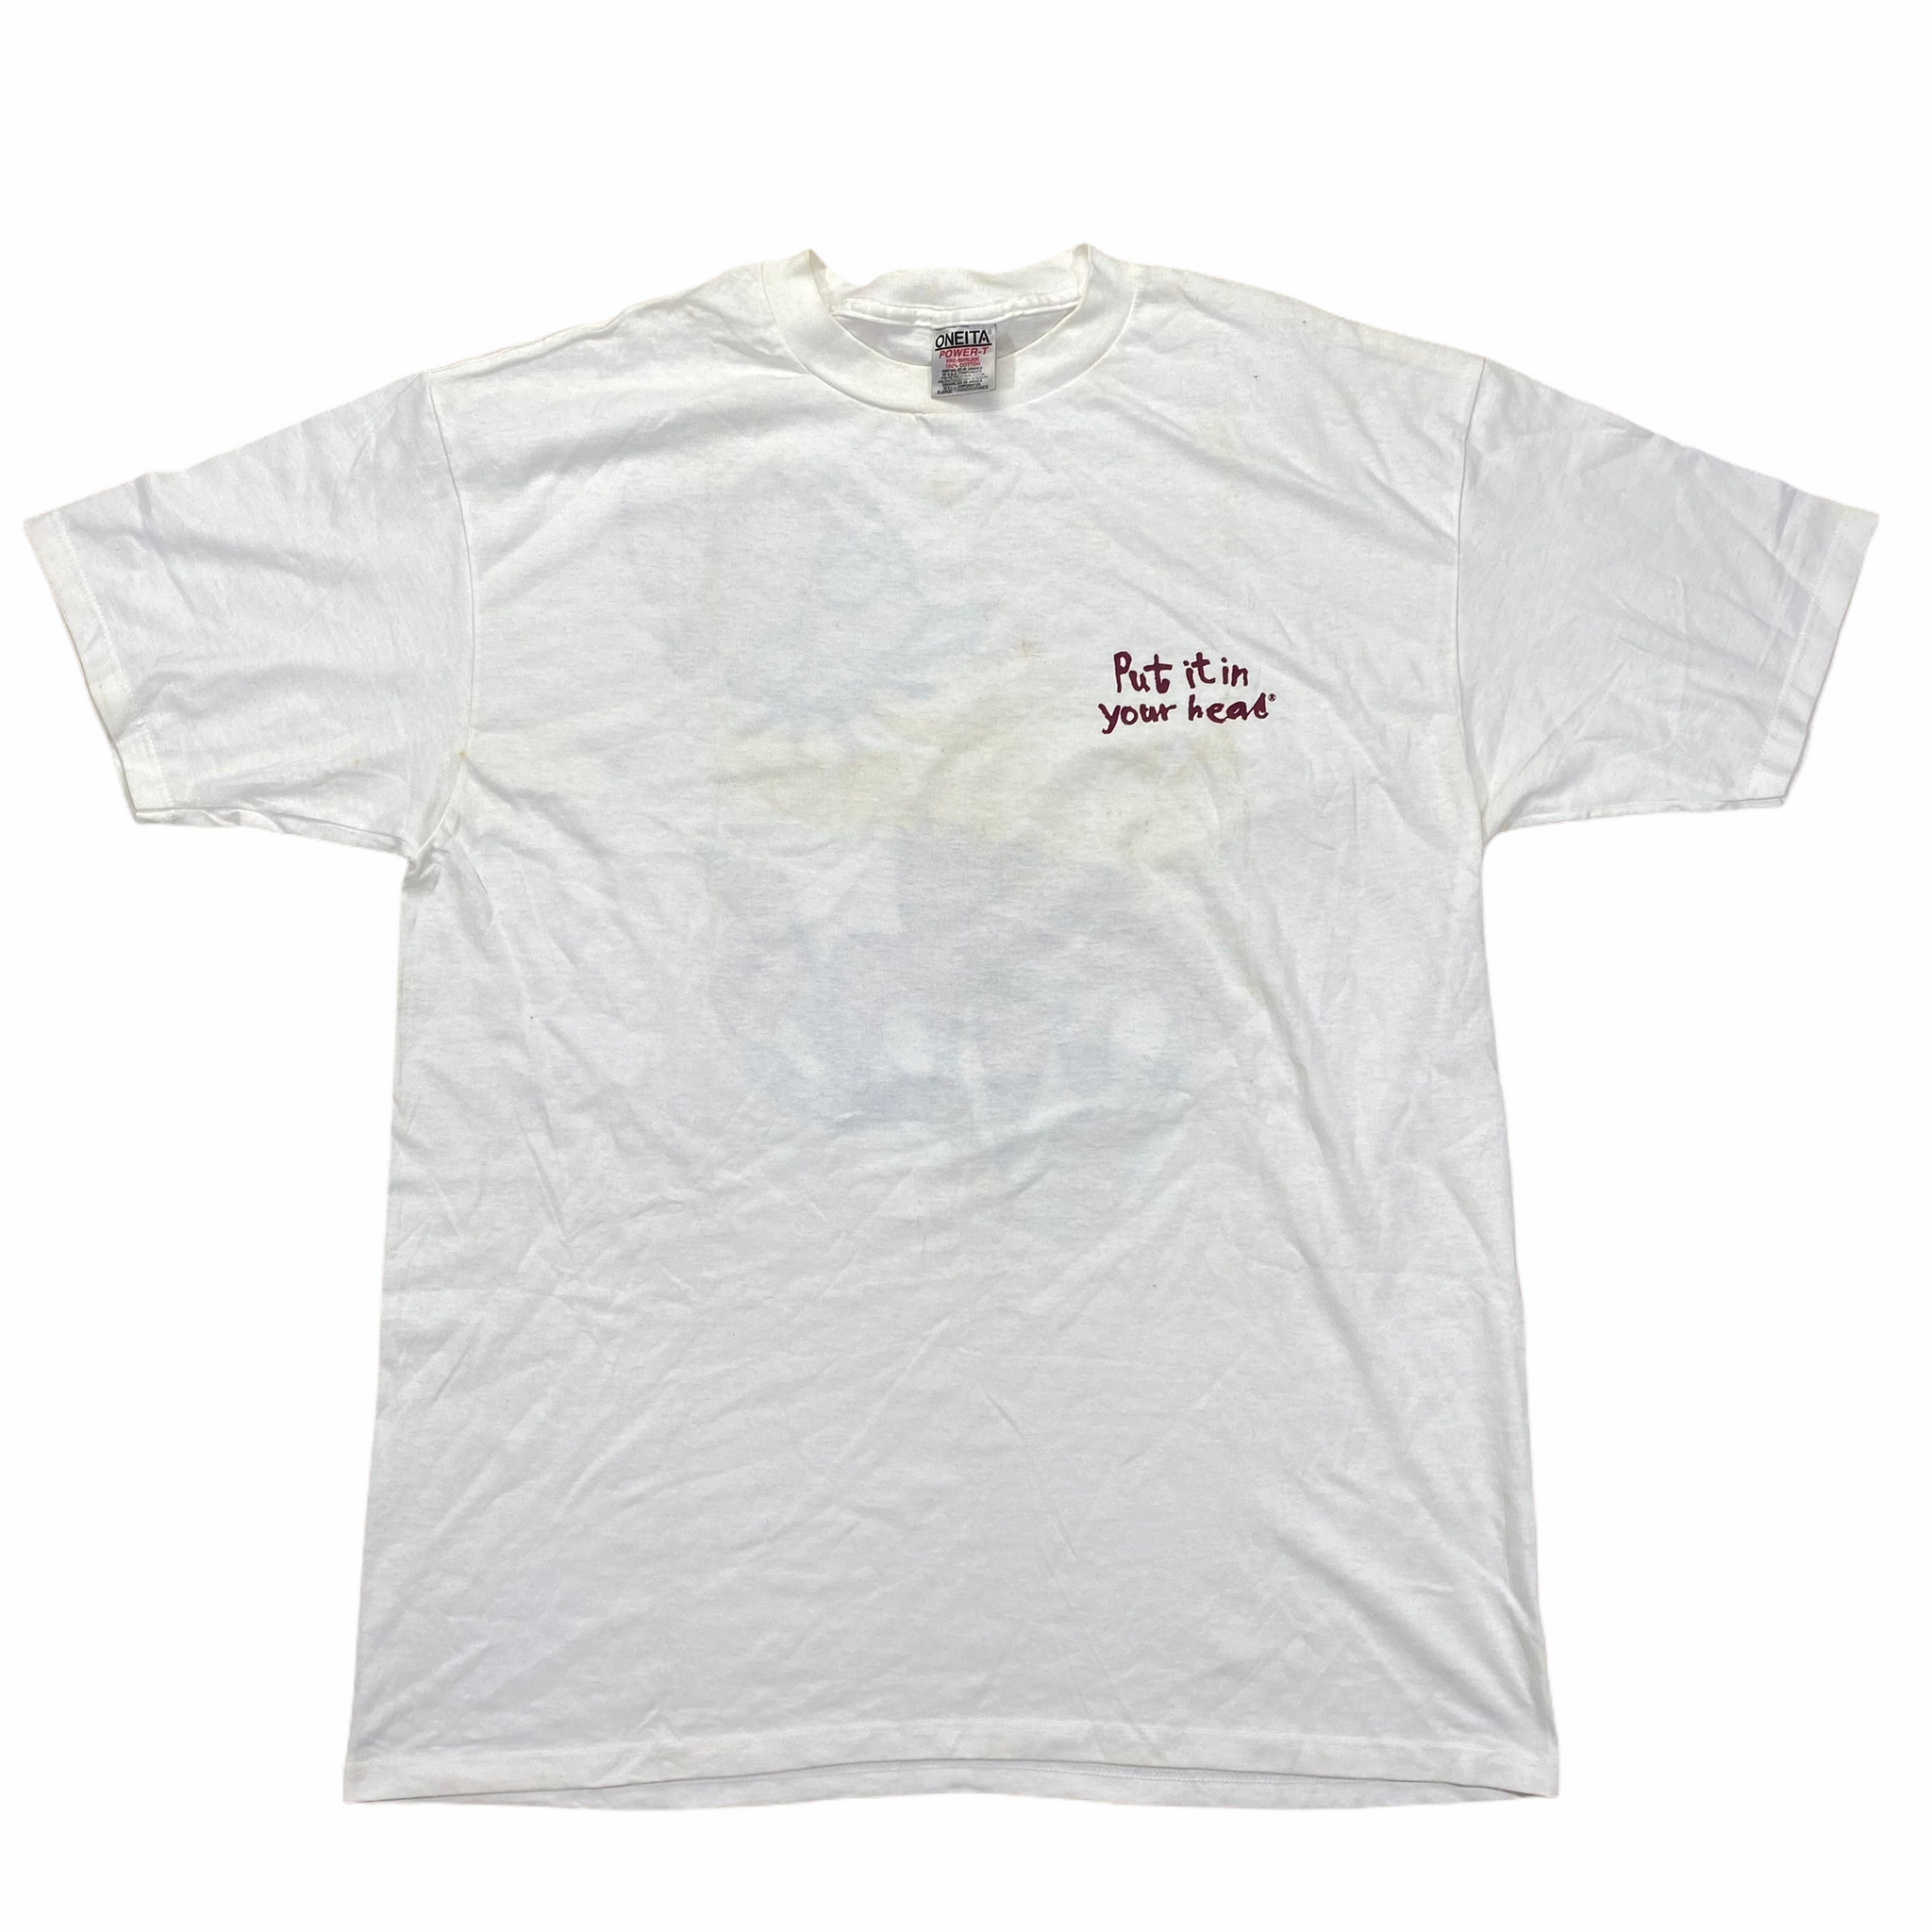 90s Mr Pibb T-Shirt XL